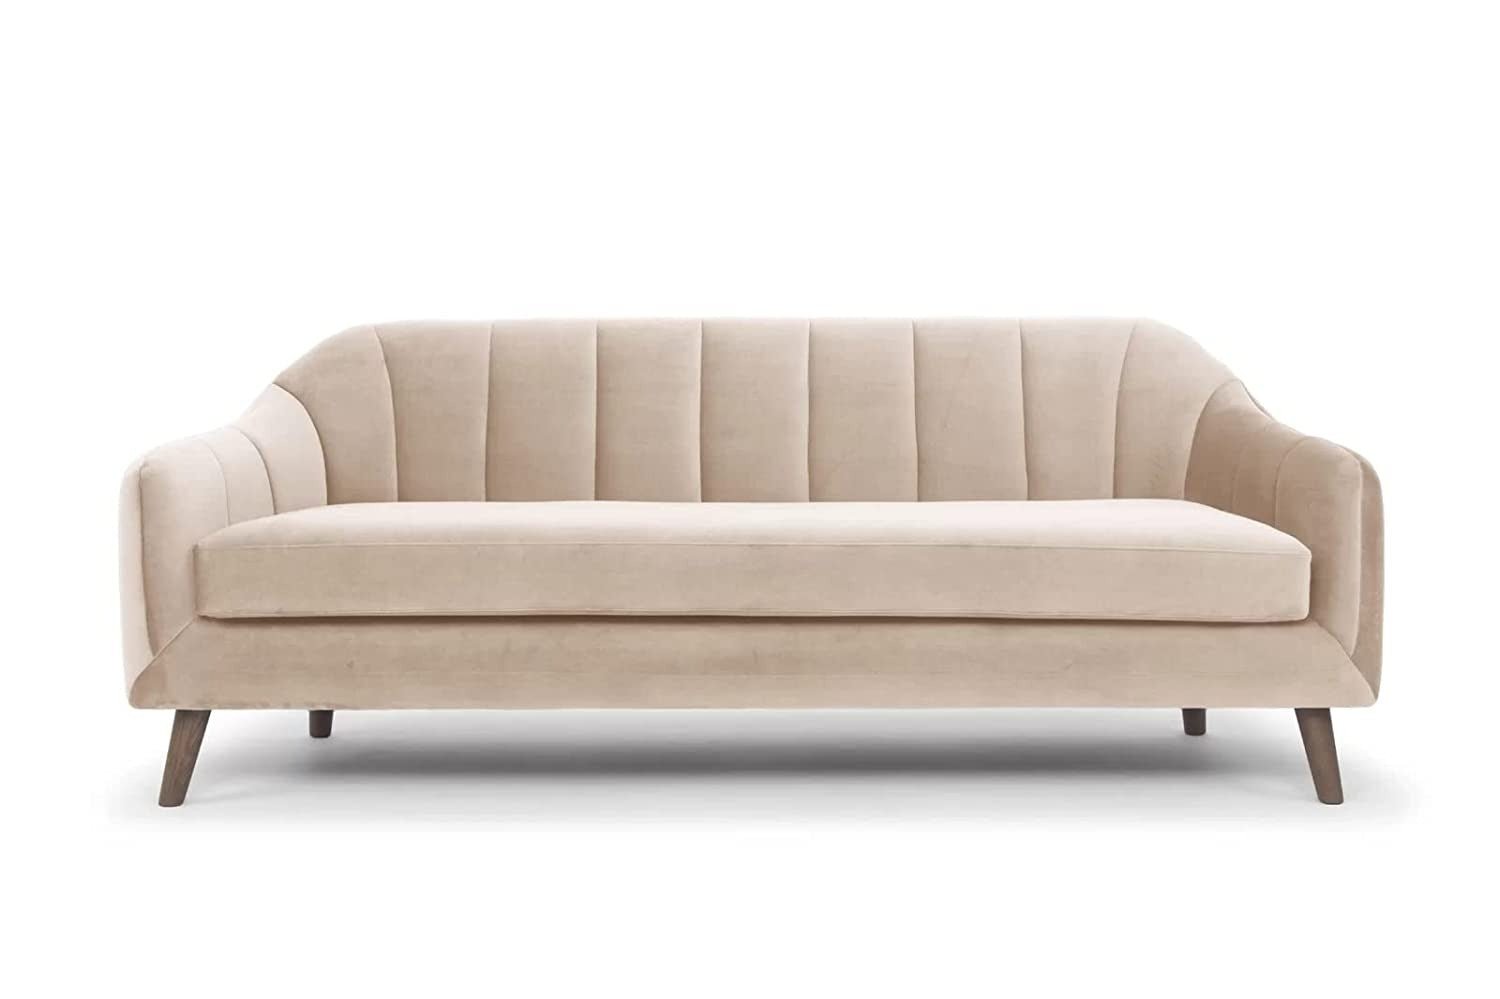 Skyler Premium Fabric Sofa For Living Room - Torque India